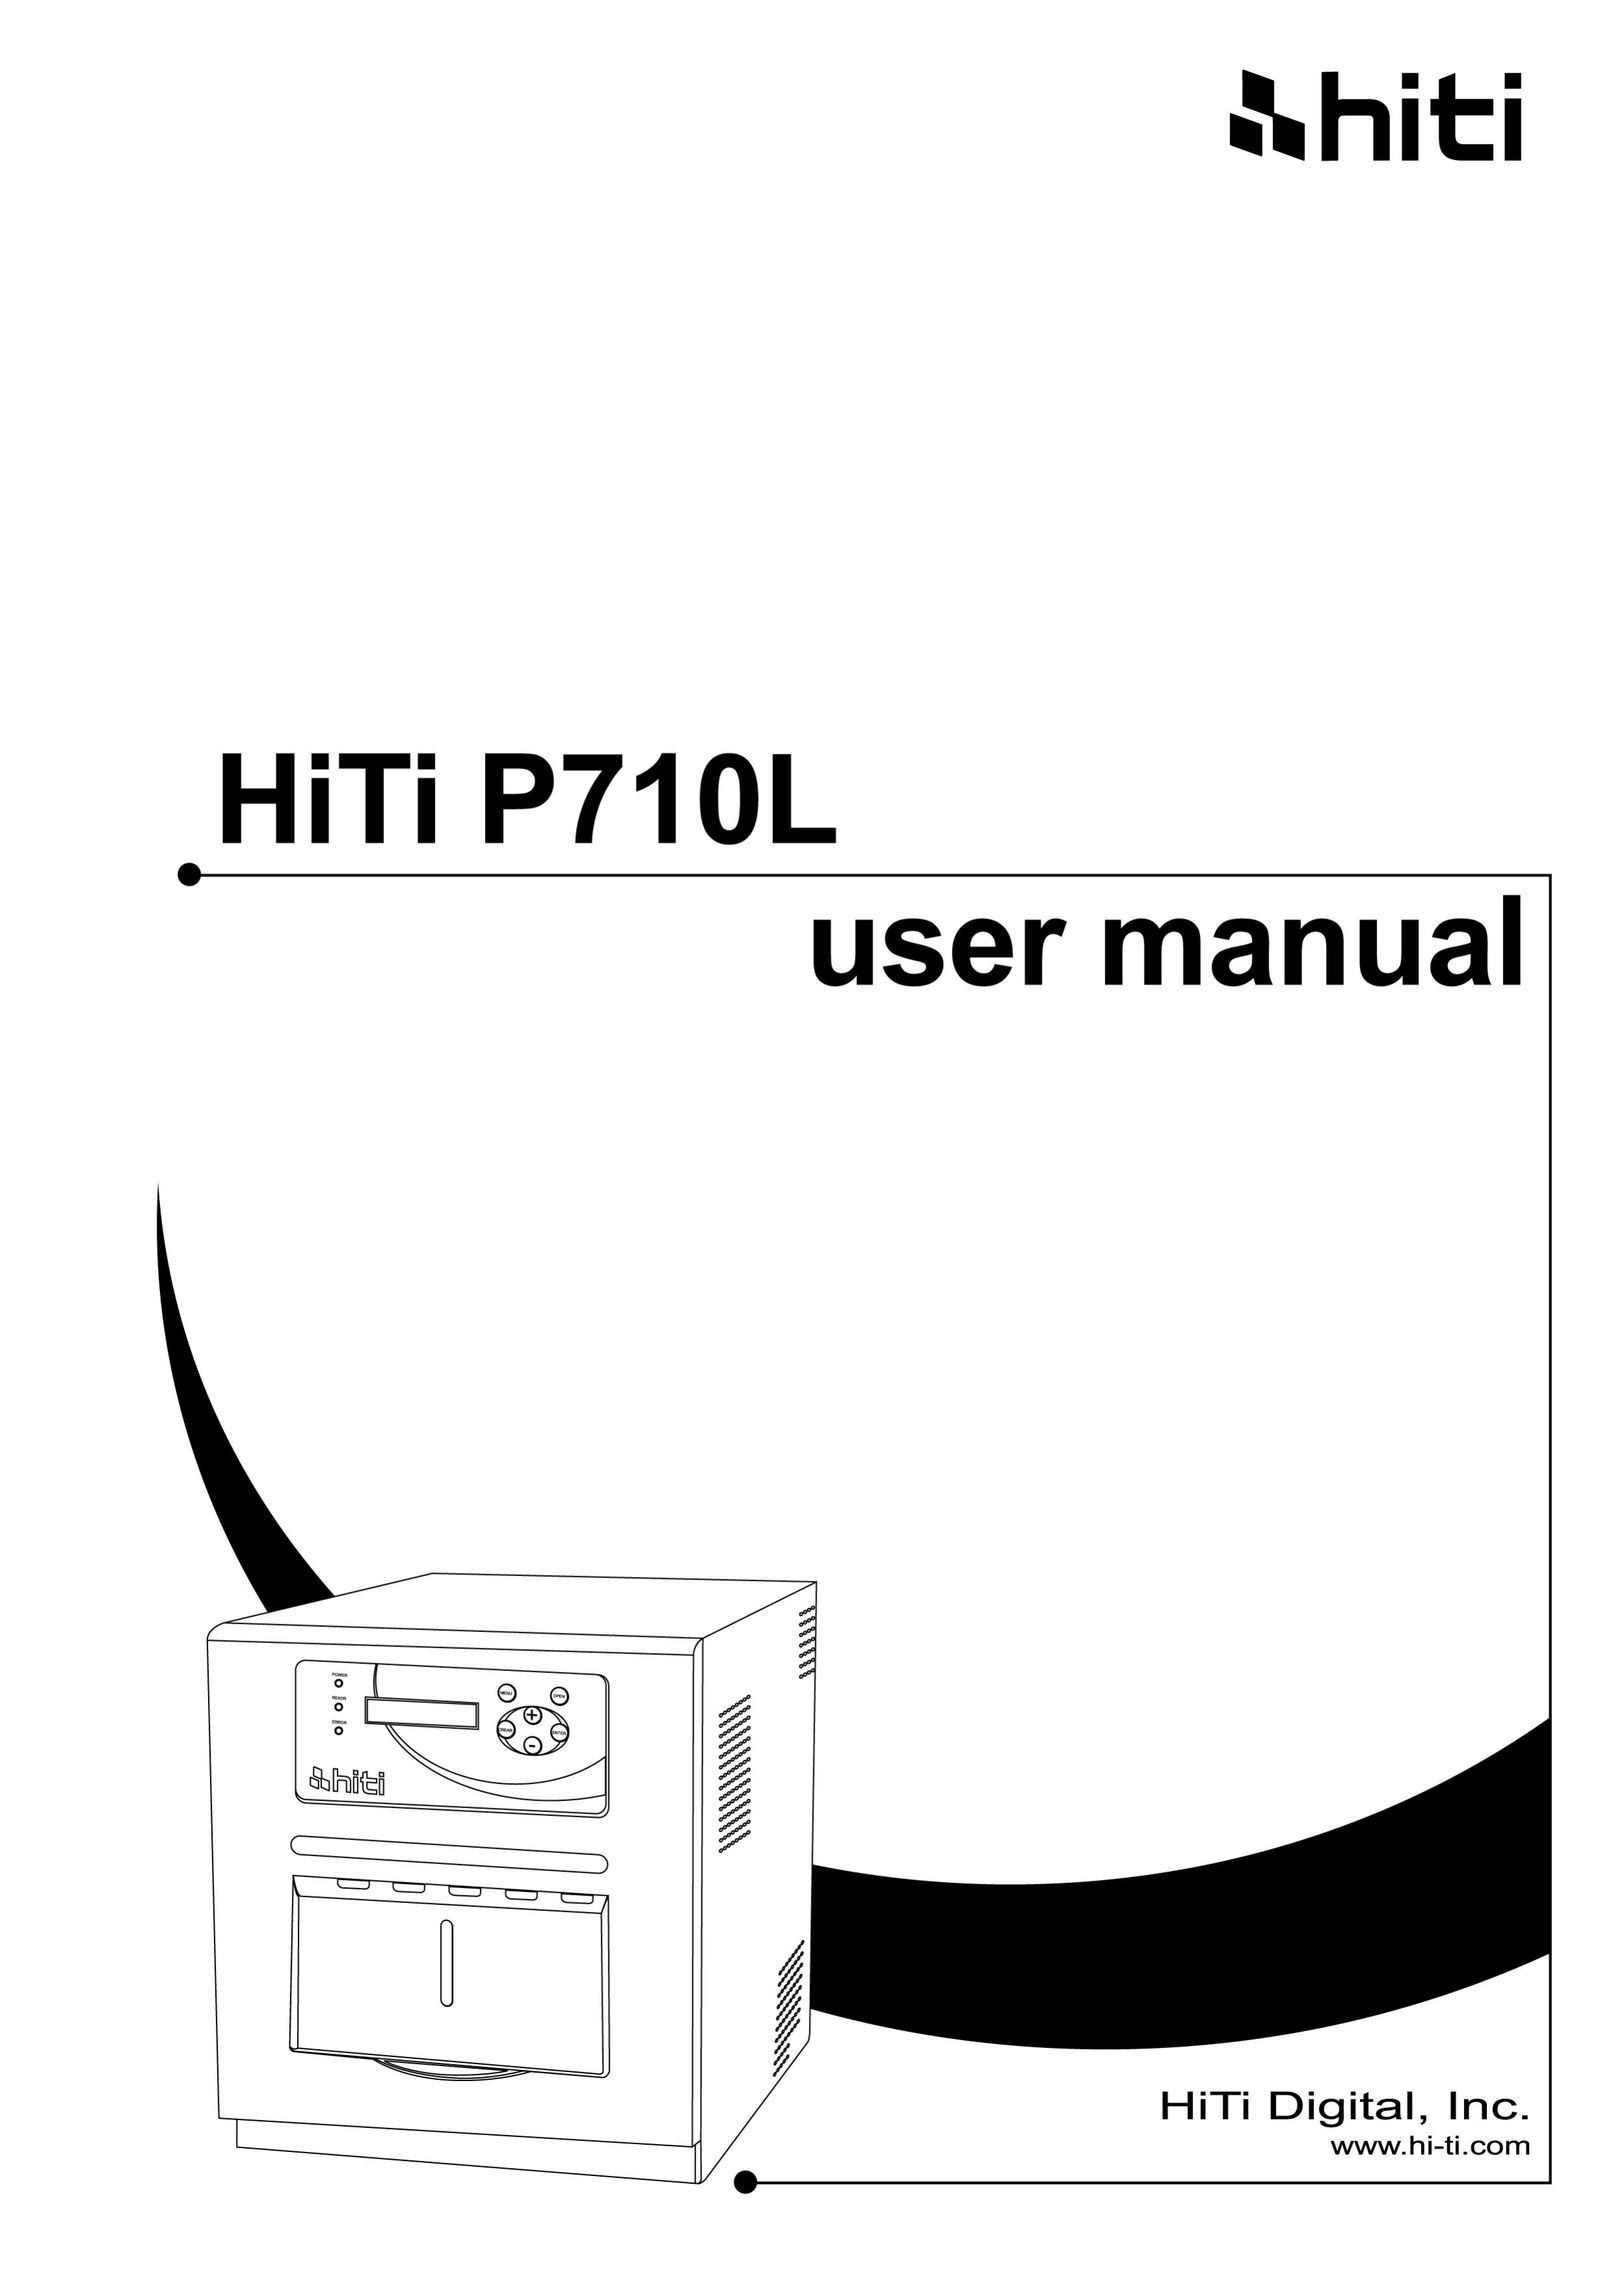 Hi-Touch Imaging Technologies P710L Printer User Manual